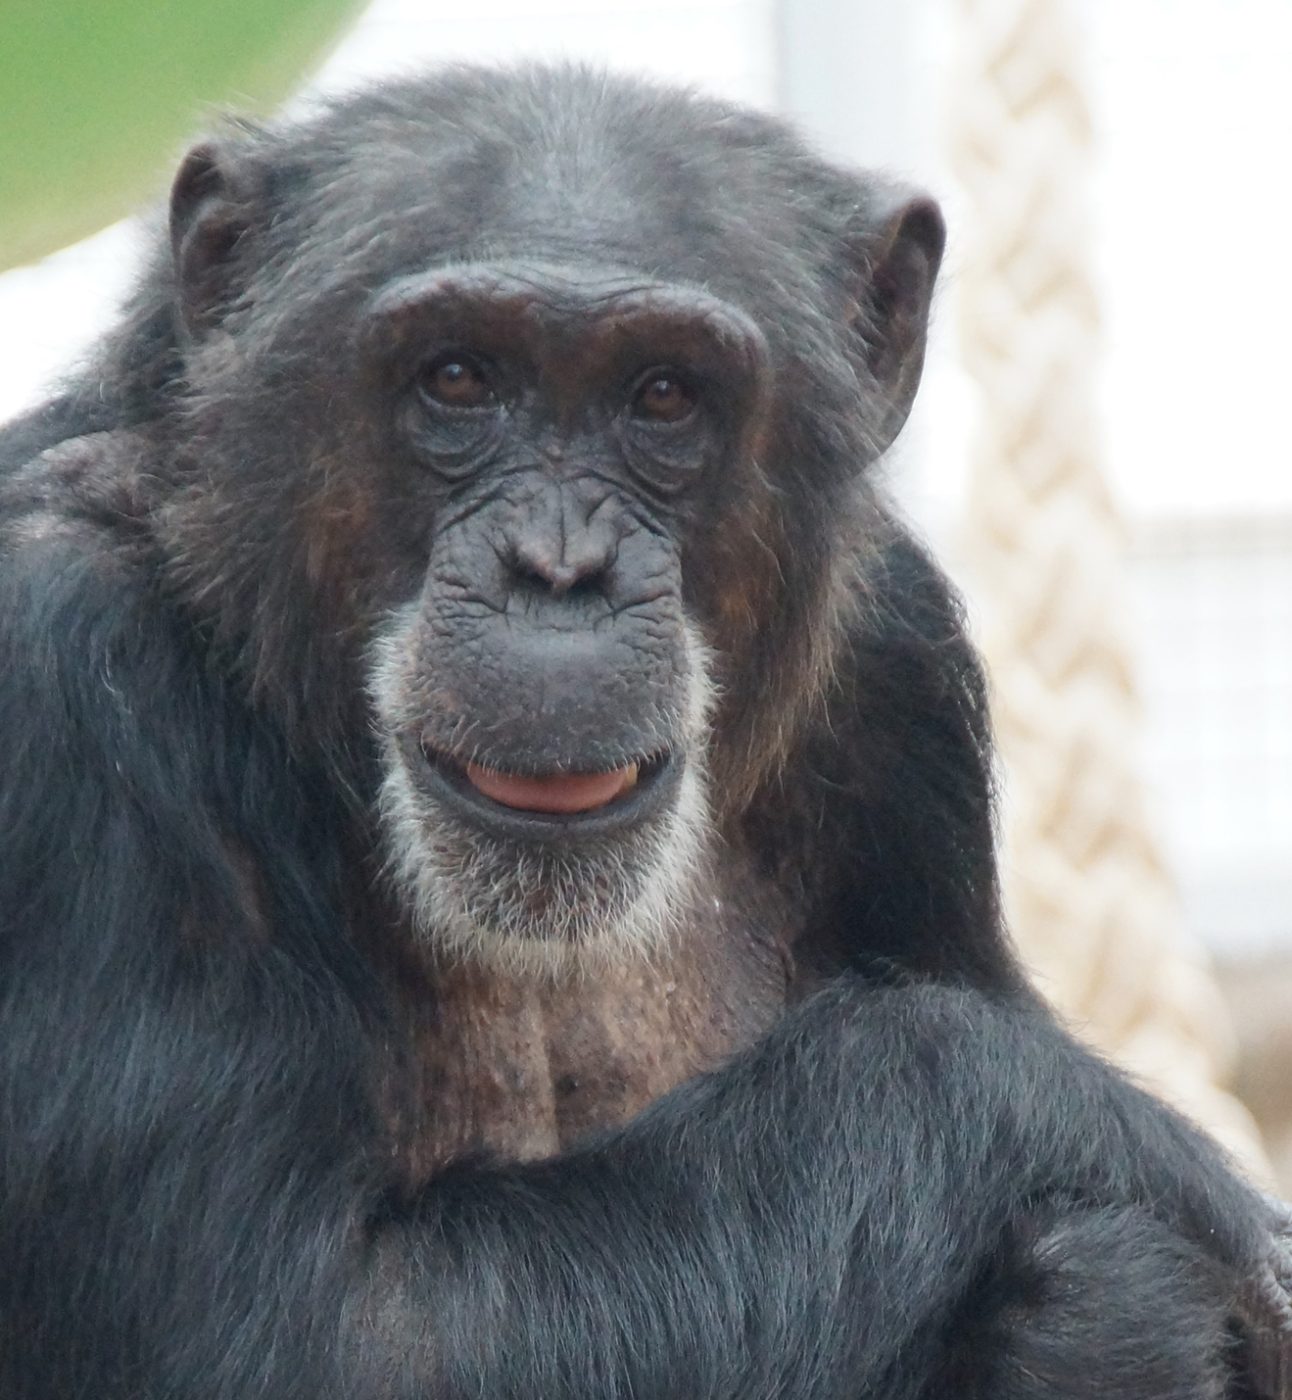 Close up of a chimpanzee looking at the camera